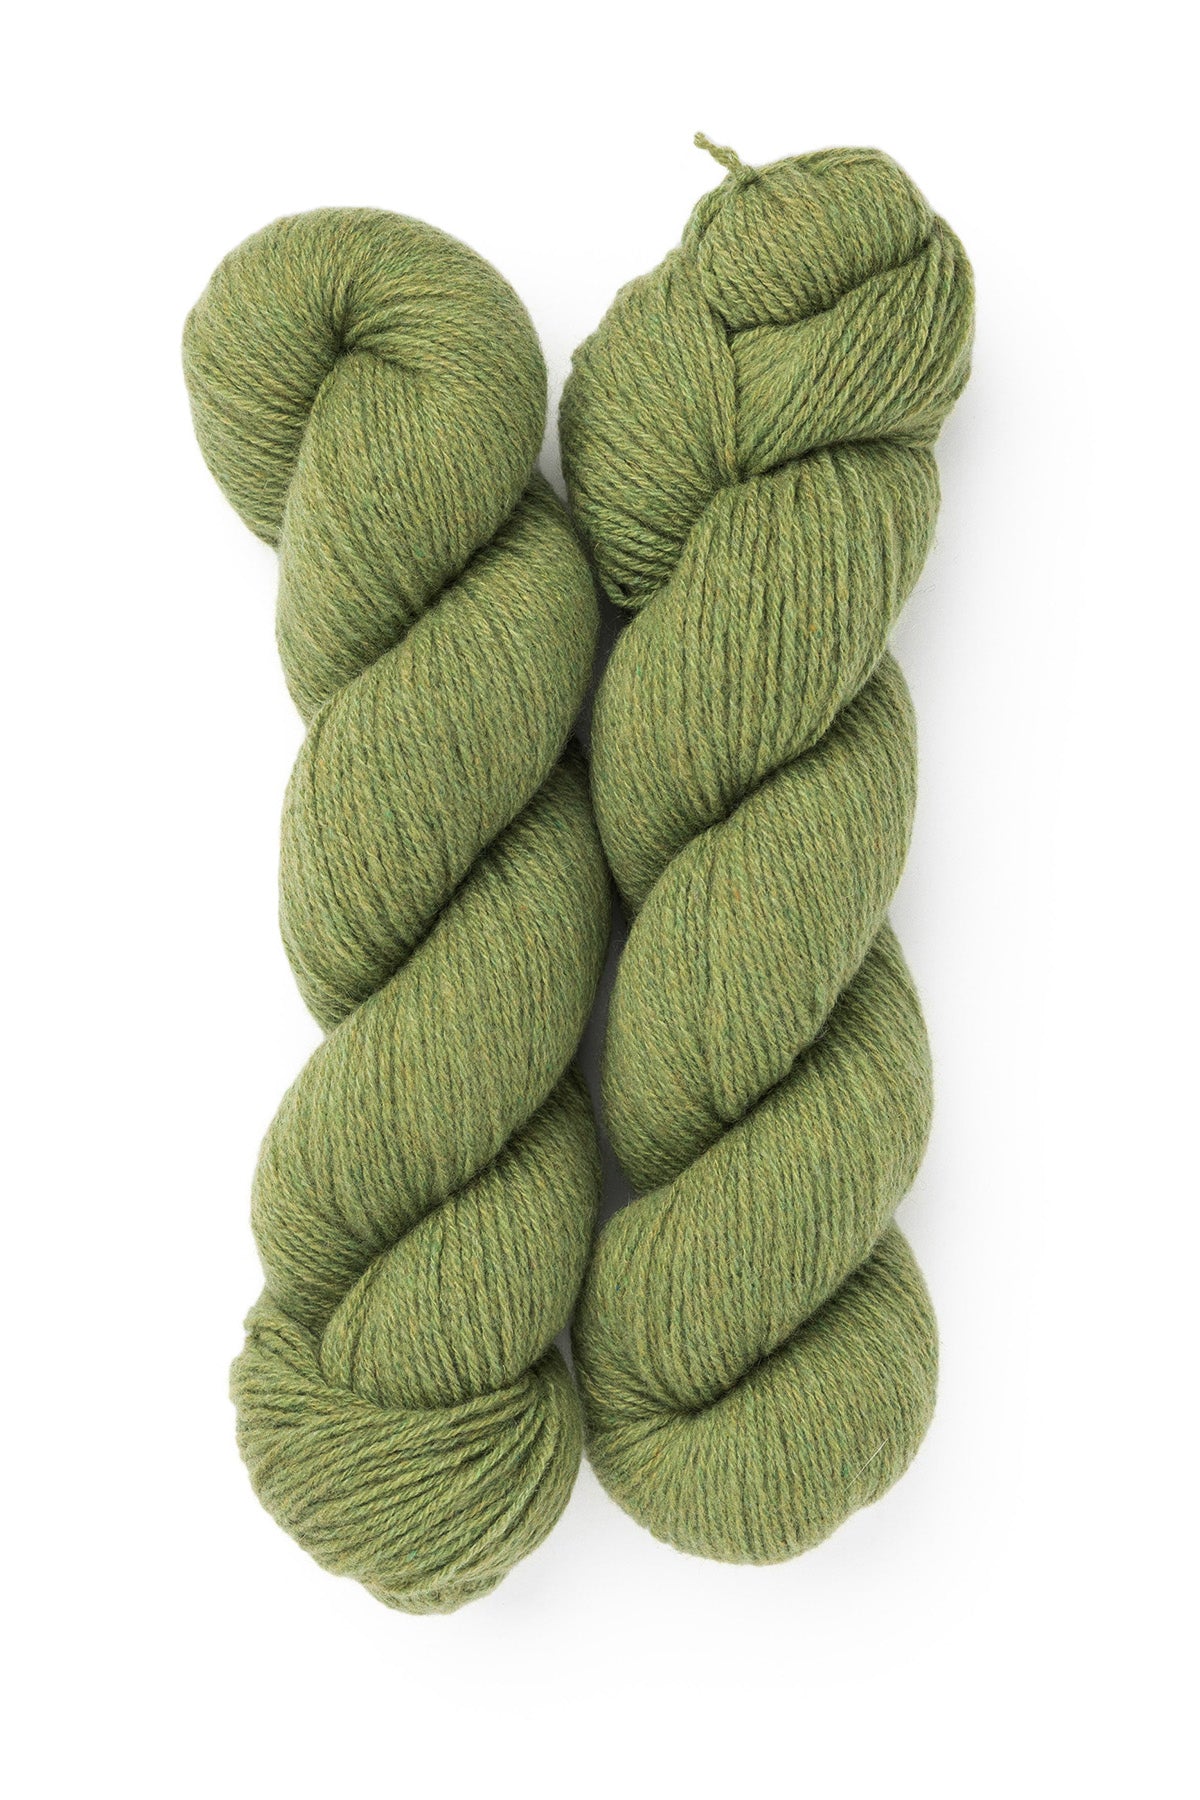 Chick Emerald Green Wool 100g, Knitting, Wool, Sewing & Needlework, Household